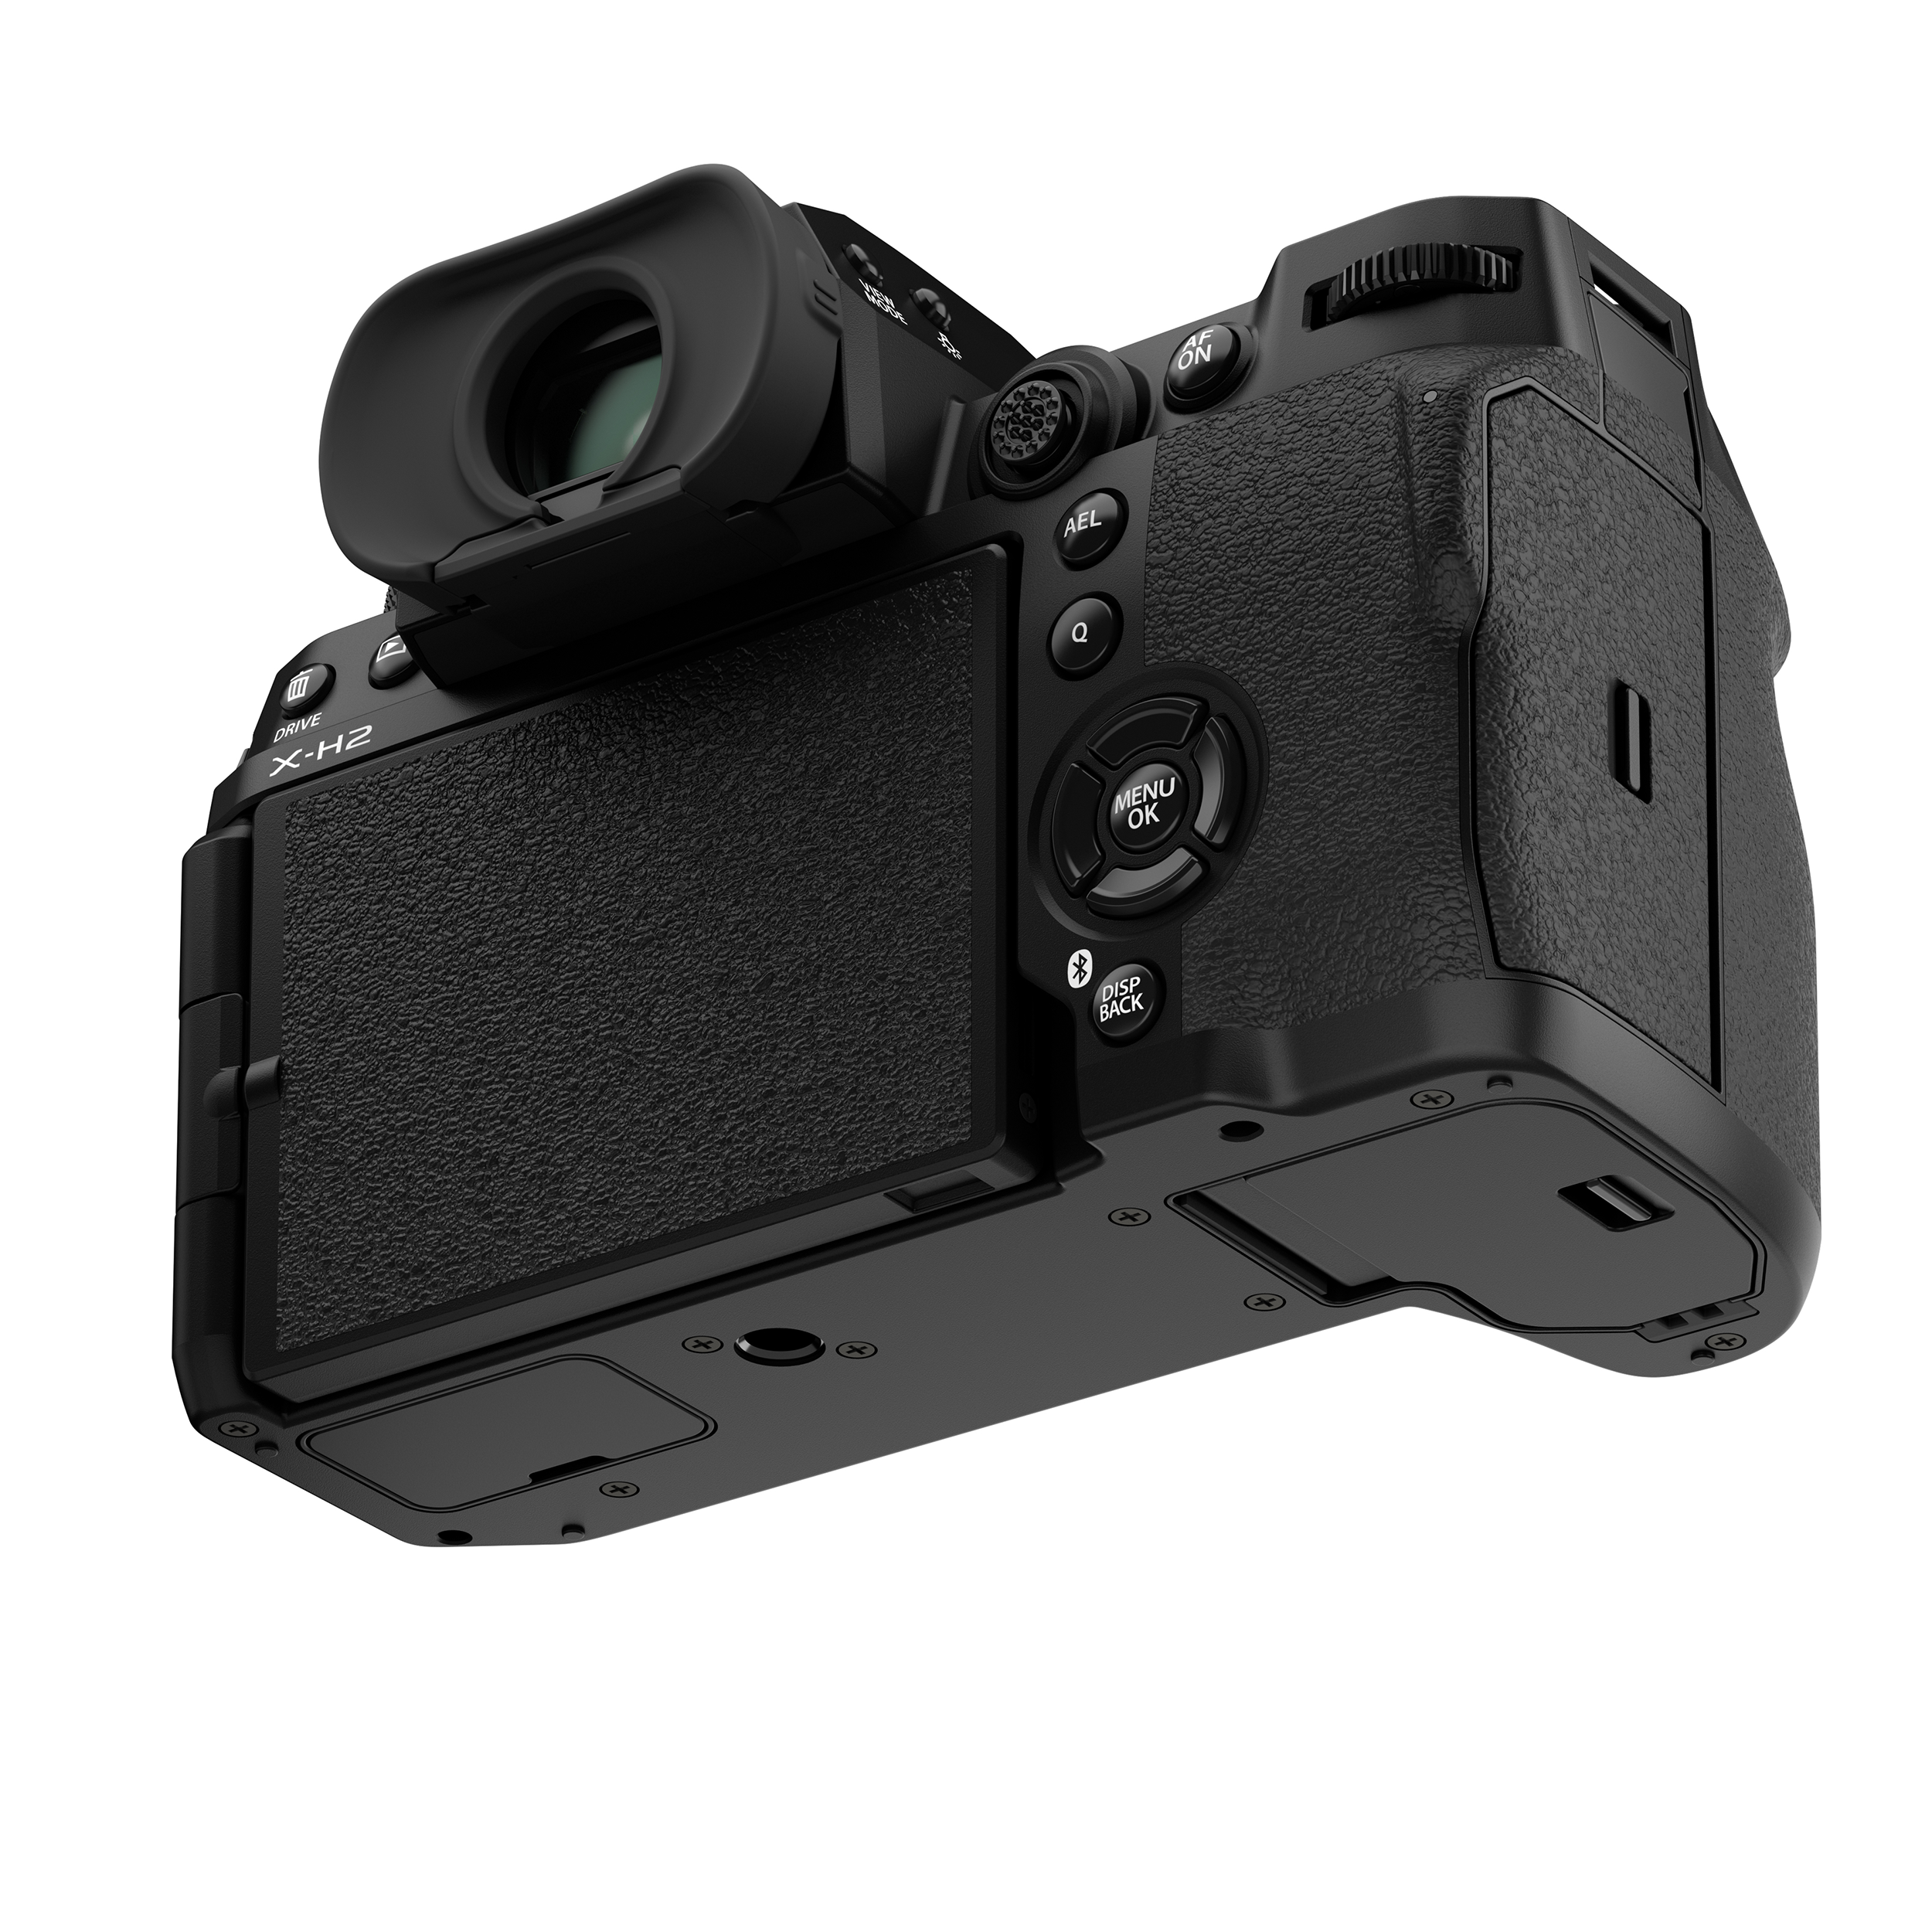 FUJIFILM X-H2 Mirrorless Camera with FUJINON XF16-80mmF4 R OIS WR Lens Kit, Black